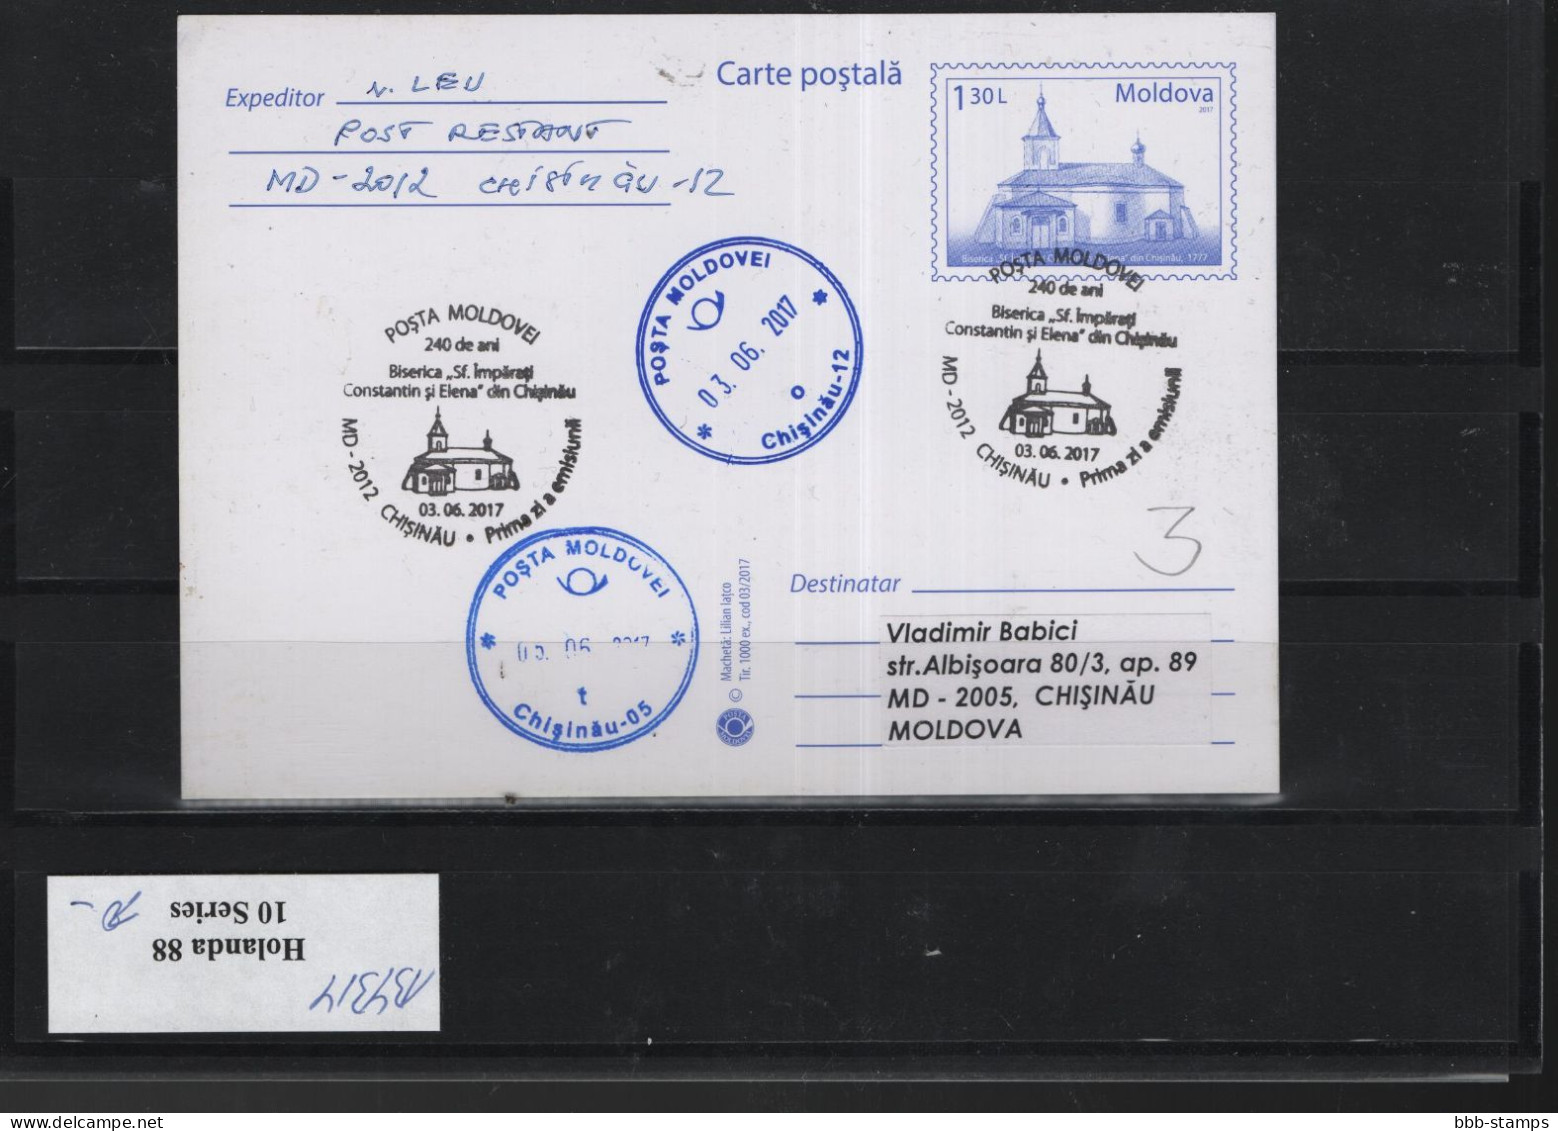 Moldavien Michel Cat.No. Postal Stat  Card Issued  3.6.2017 Used - Moldova